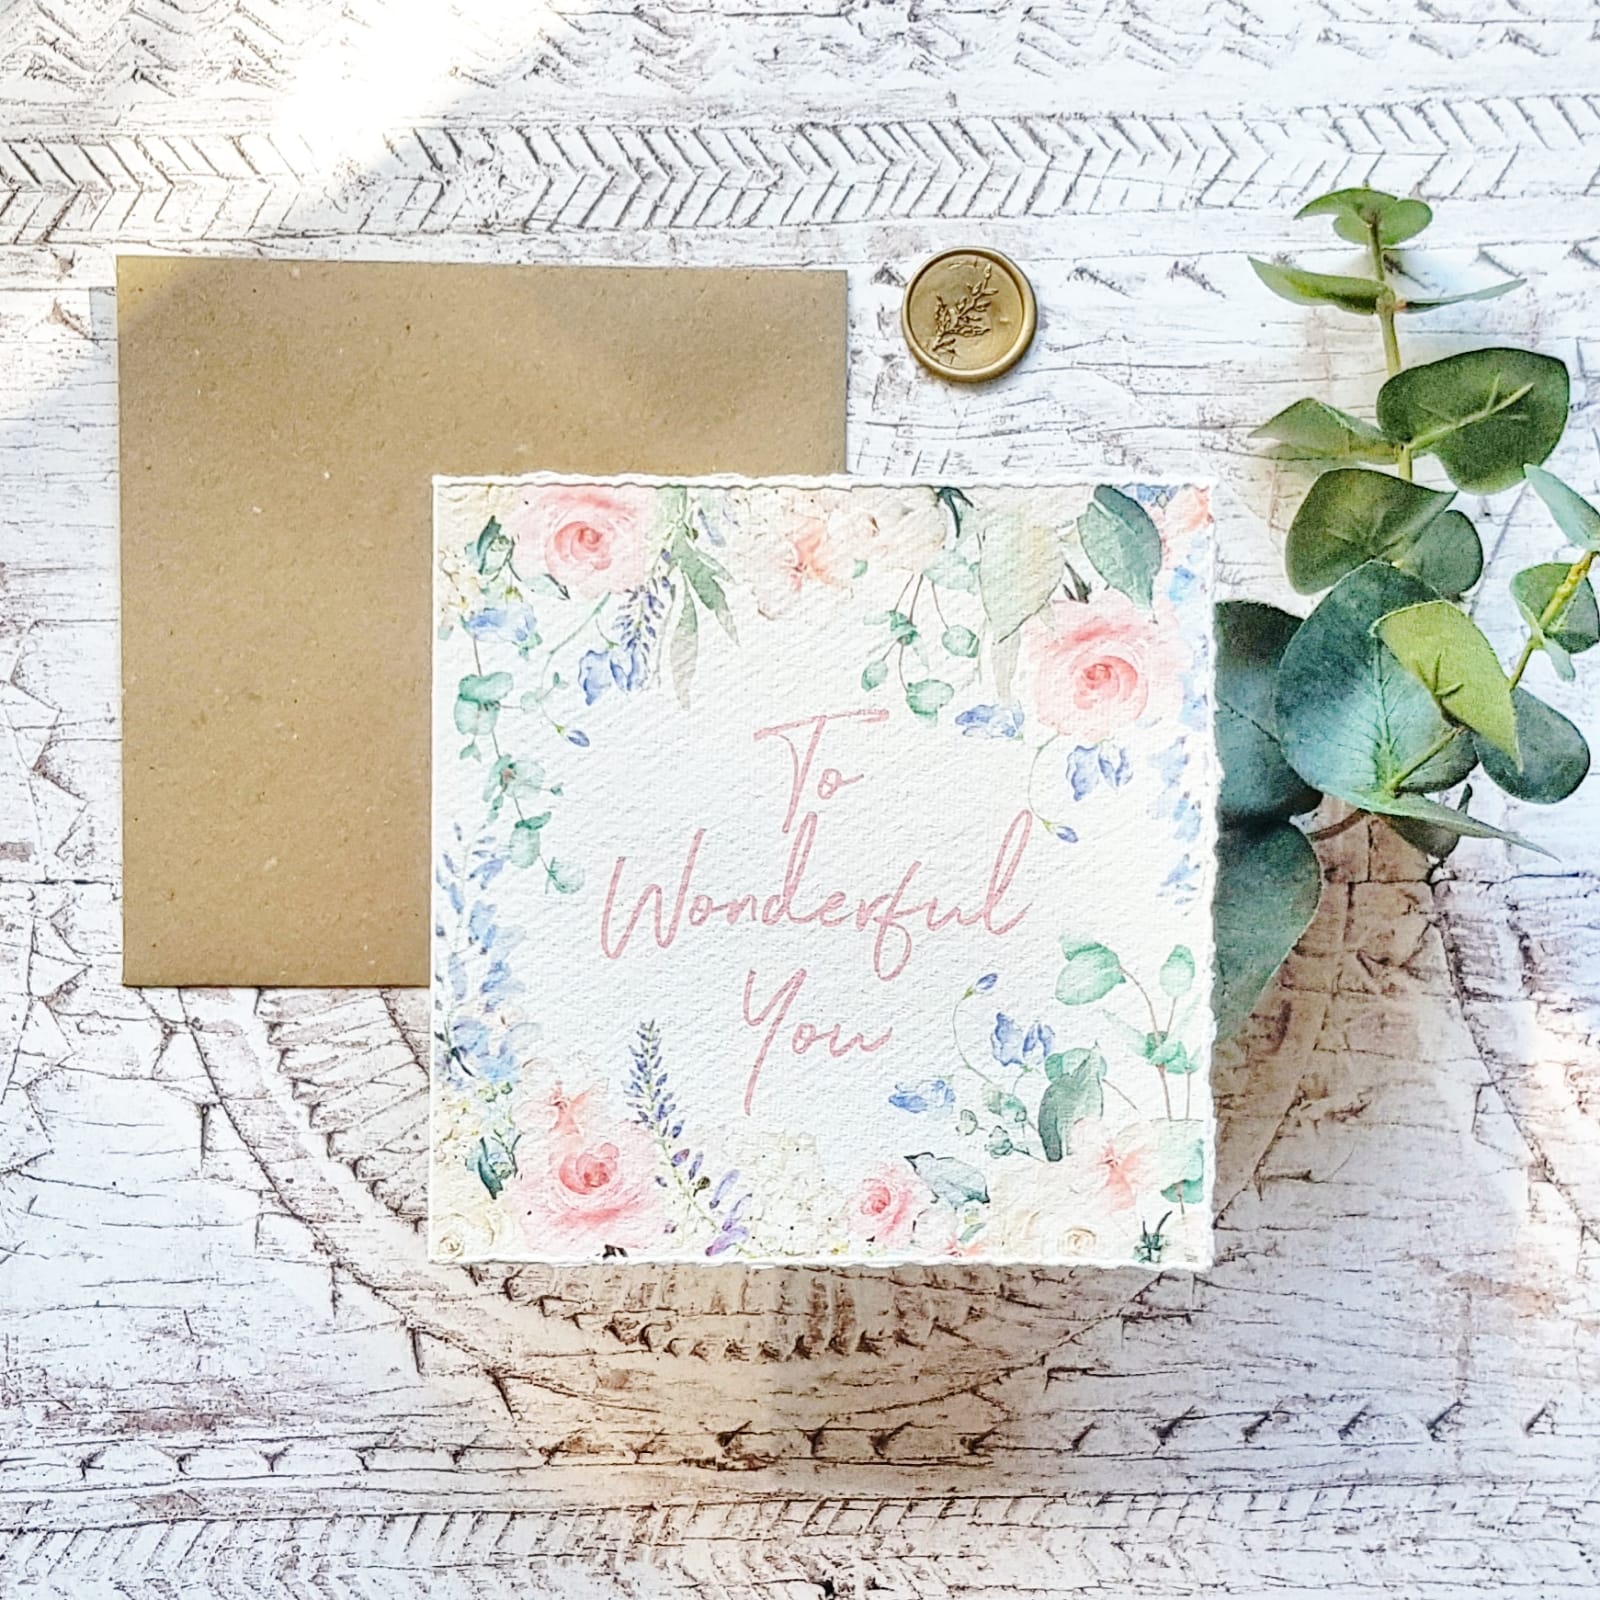 'To Wonderful You' Handmade Paper Greetings Card